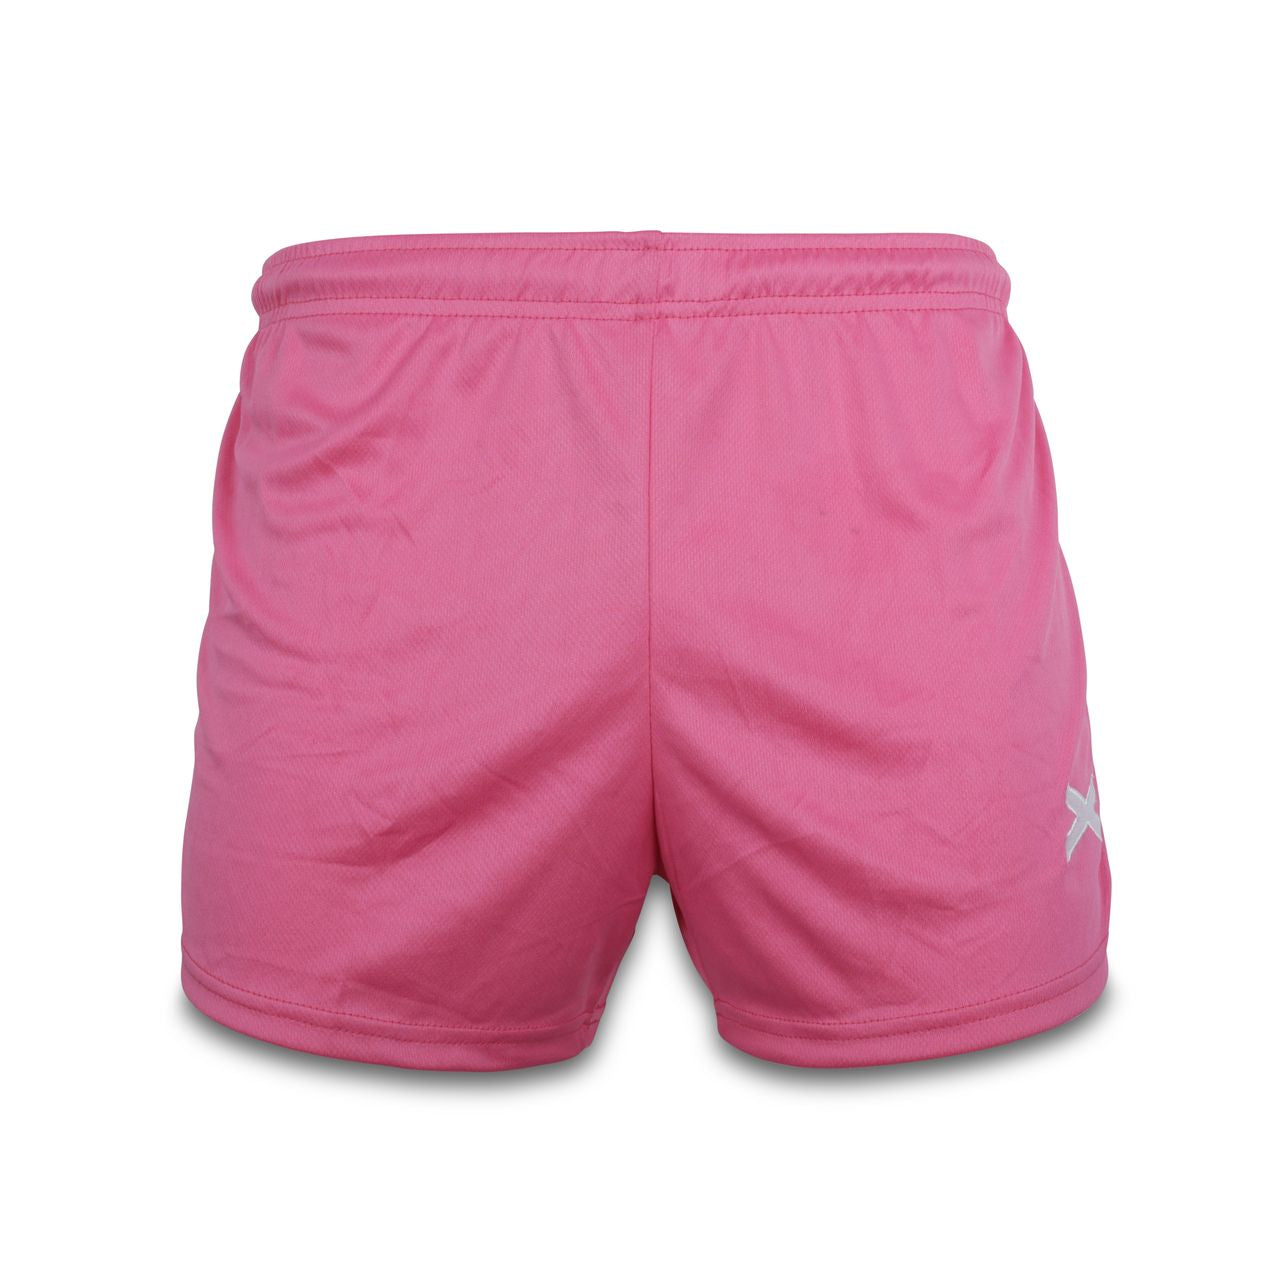 GAA Shorts Pink with White Stripes Gaelic Games Sportswear